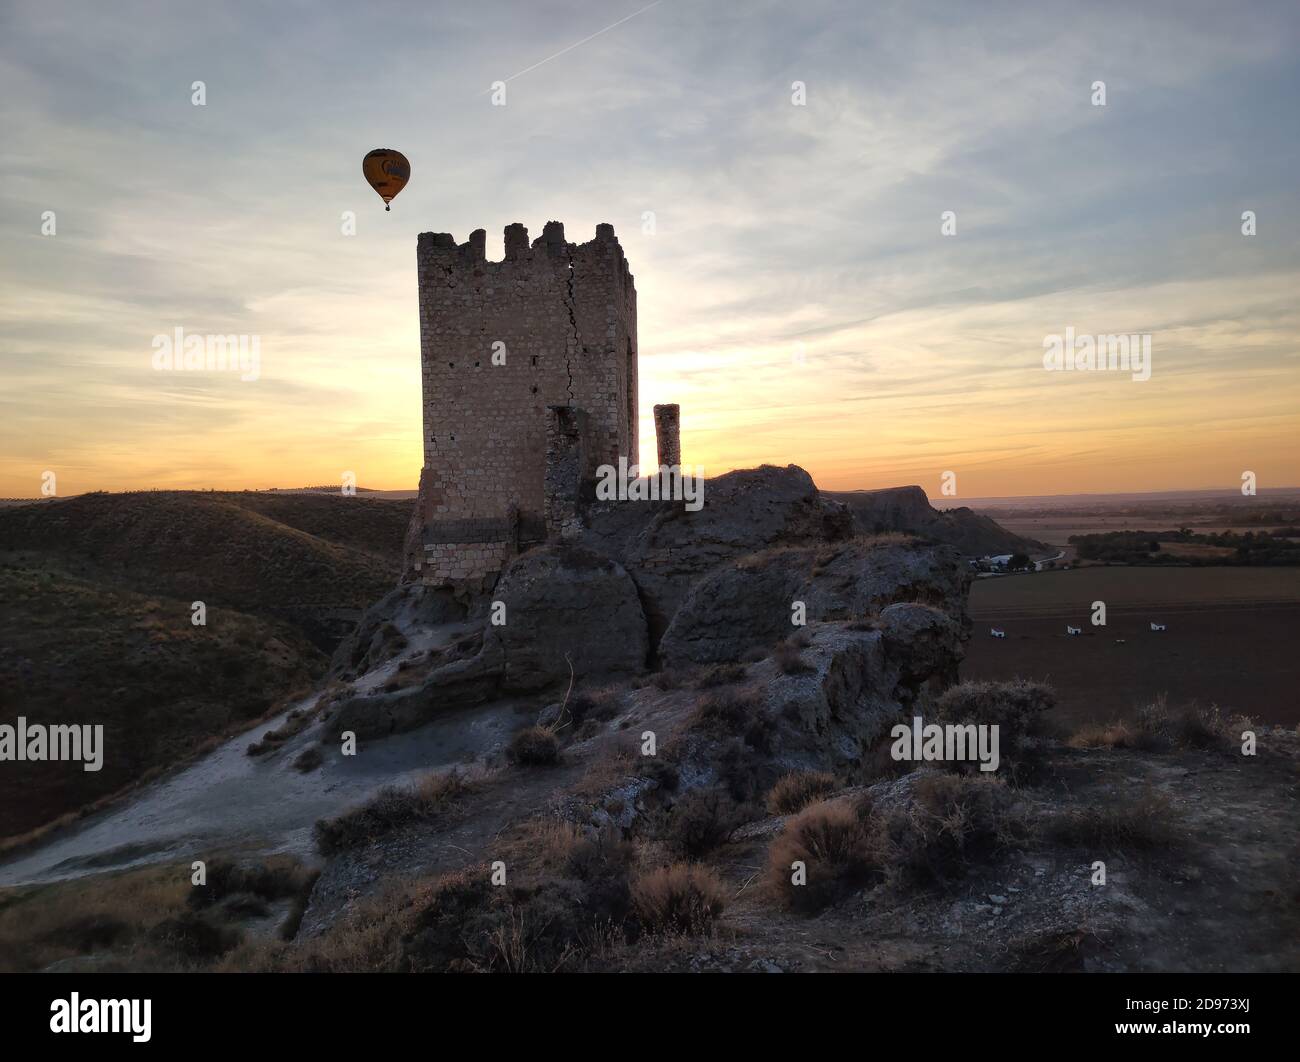 ONTíGOLA, SPAIN - Oct 17, 2020: Globo aerostatico Ultra Magic cruzando el atardecer sobre el Castillo de Oreja en Ontigola. Evento de globos organizad Stock Photo